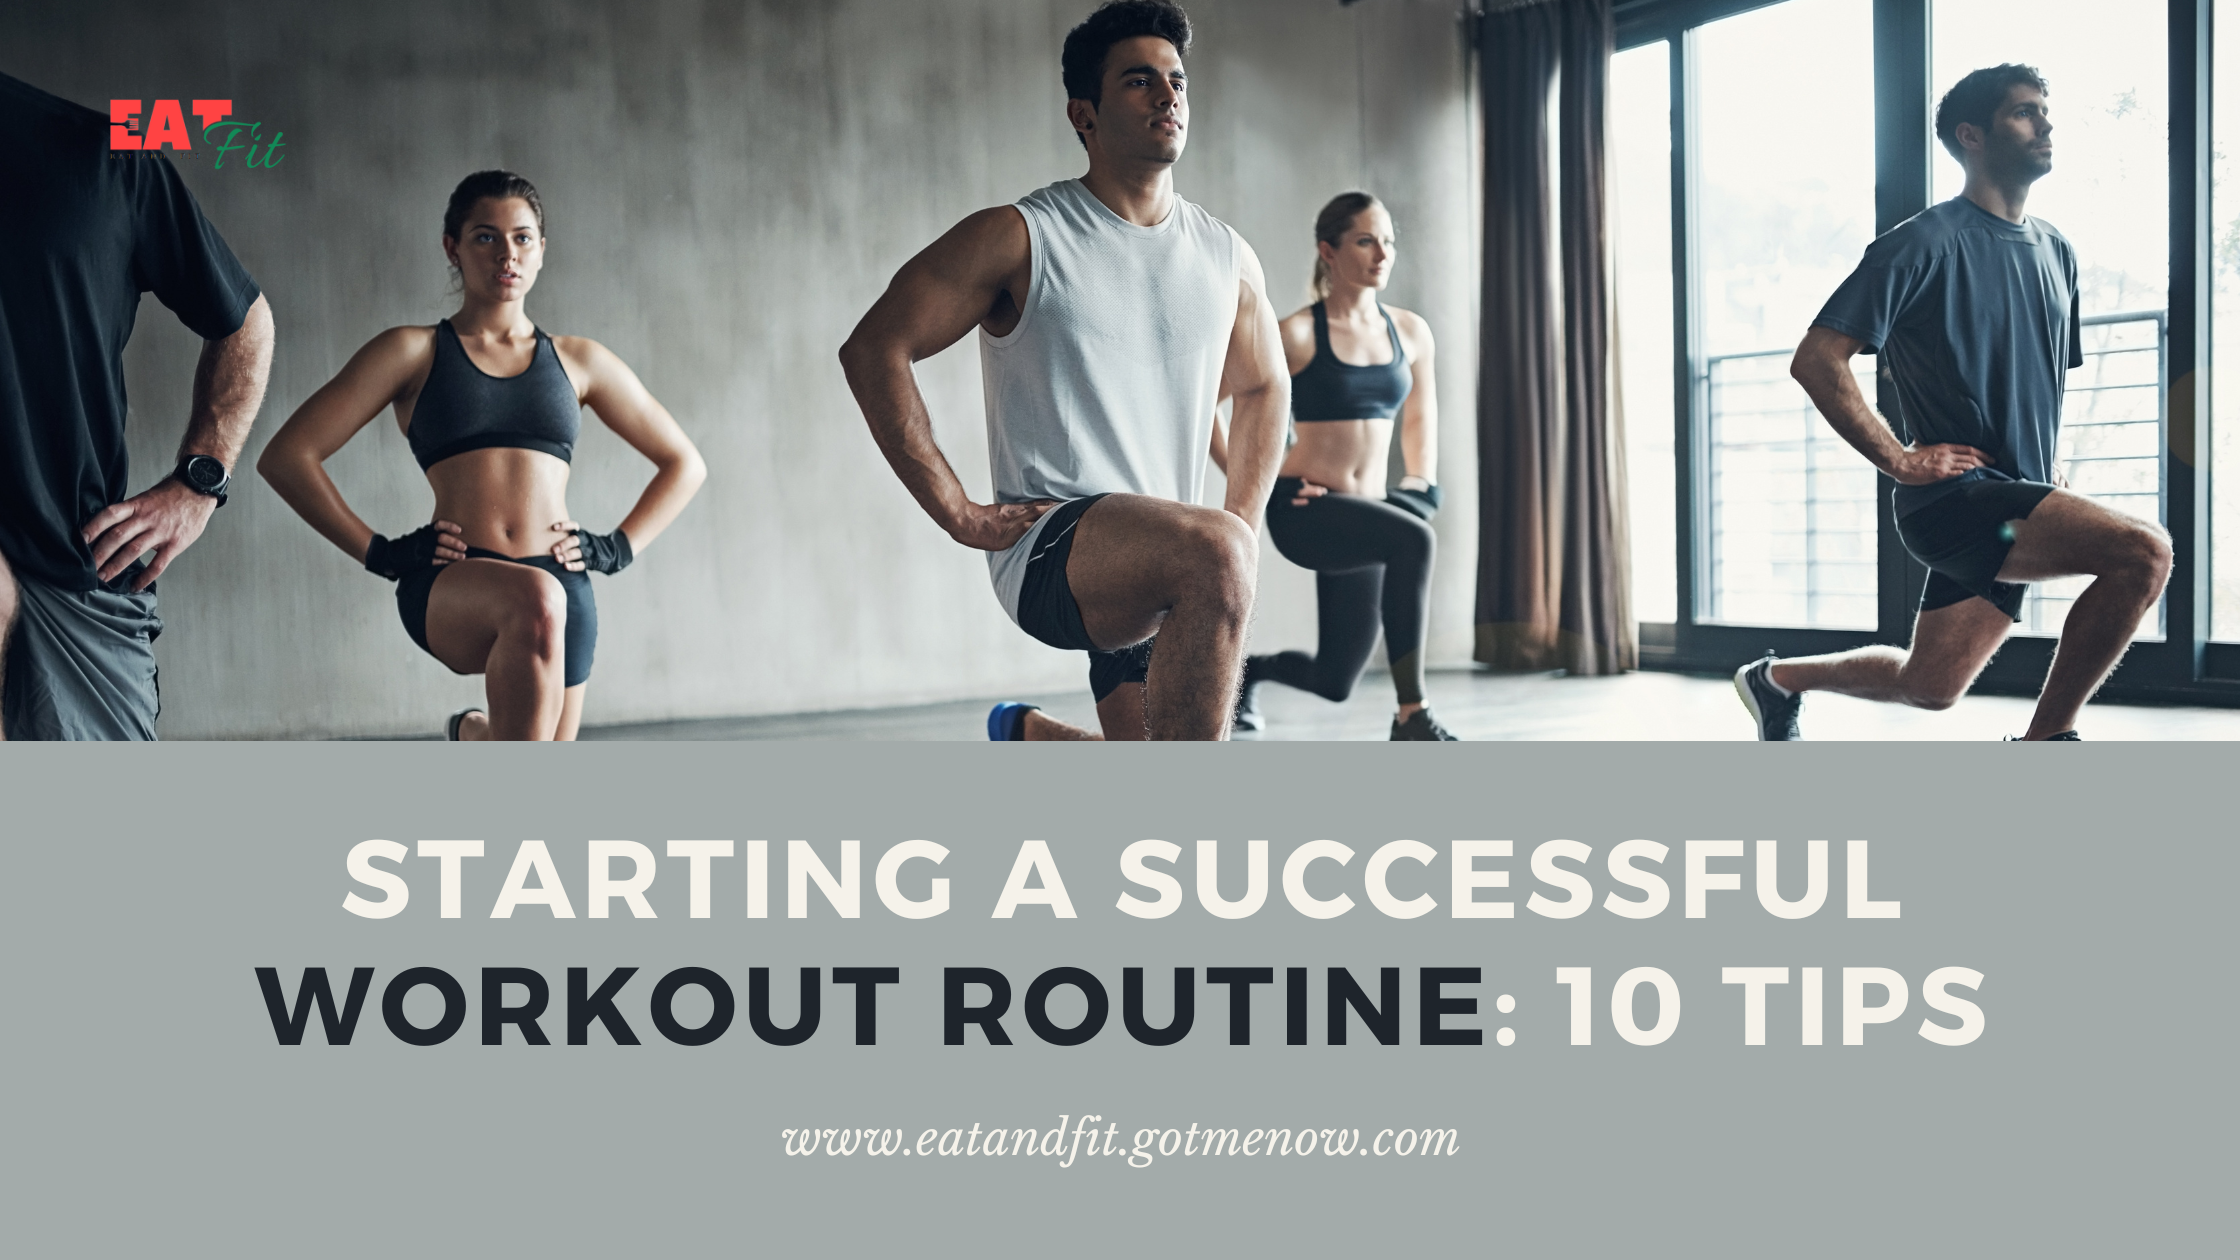 workout routine